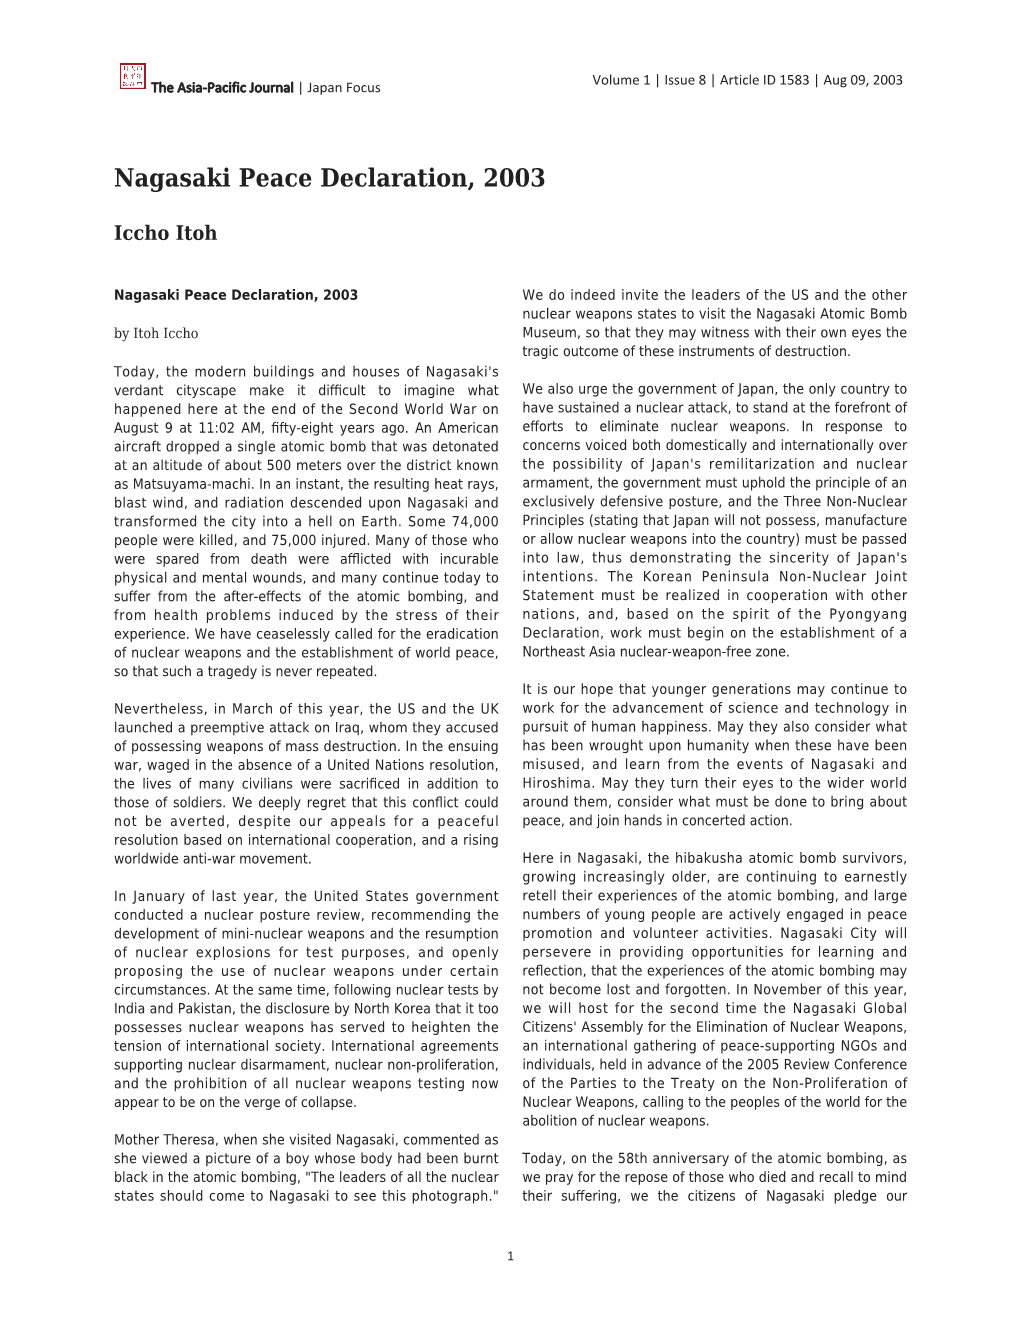 Nagasaki Peace Declaration, 2003